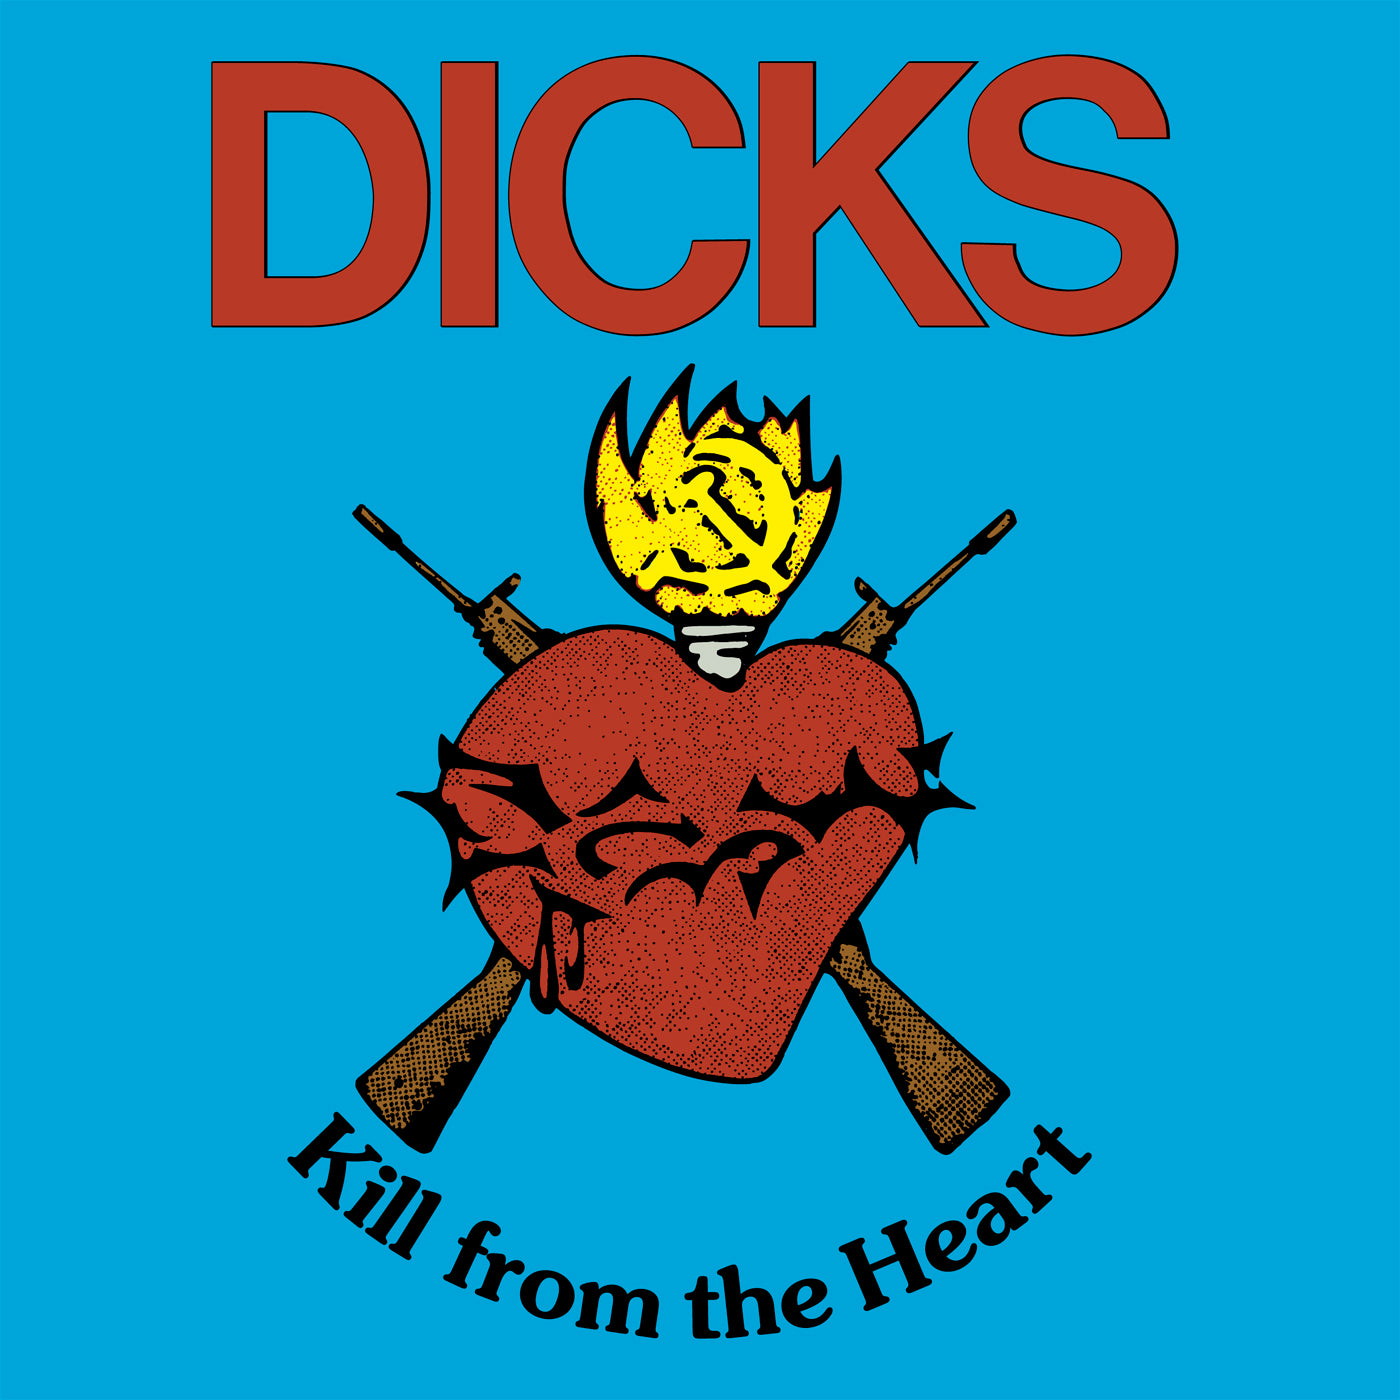 v437 - Dicks - "Kill From The Heart"